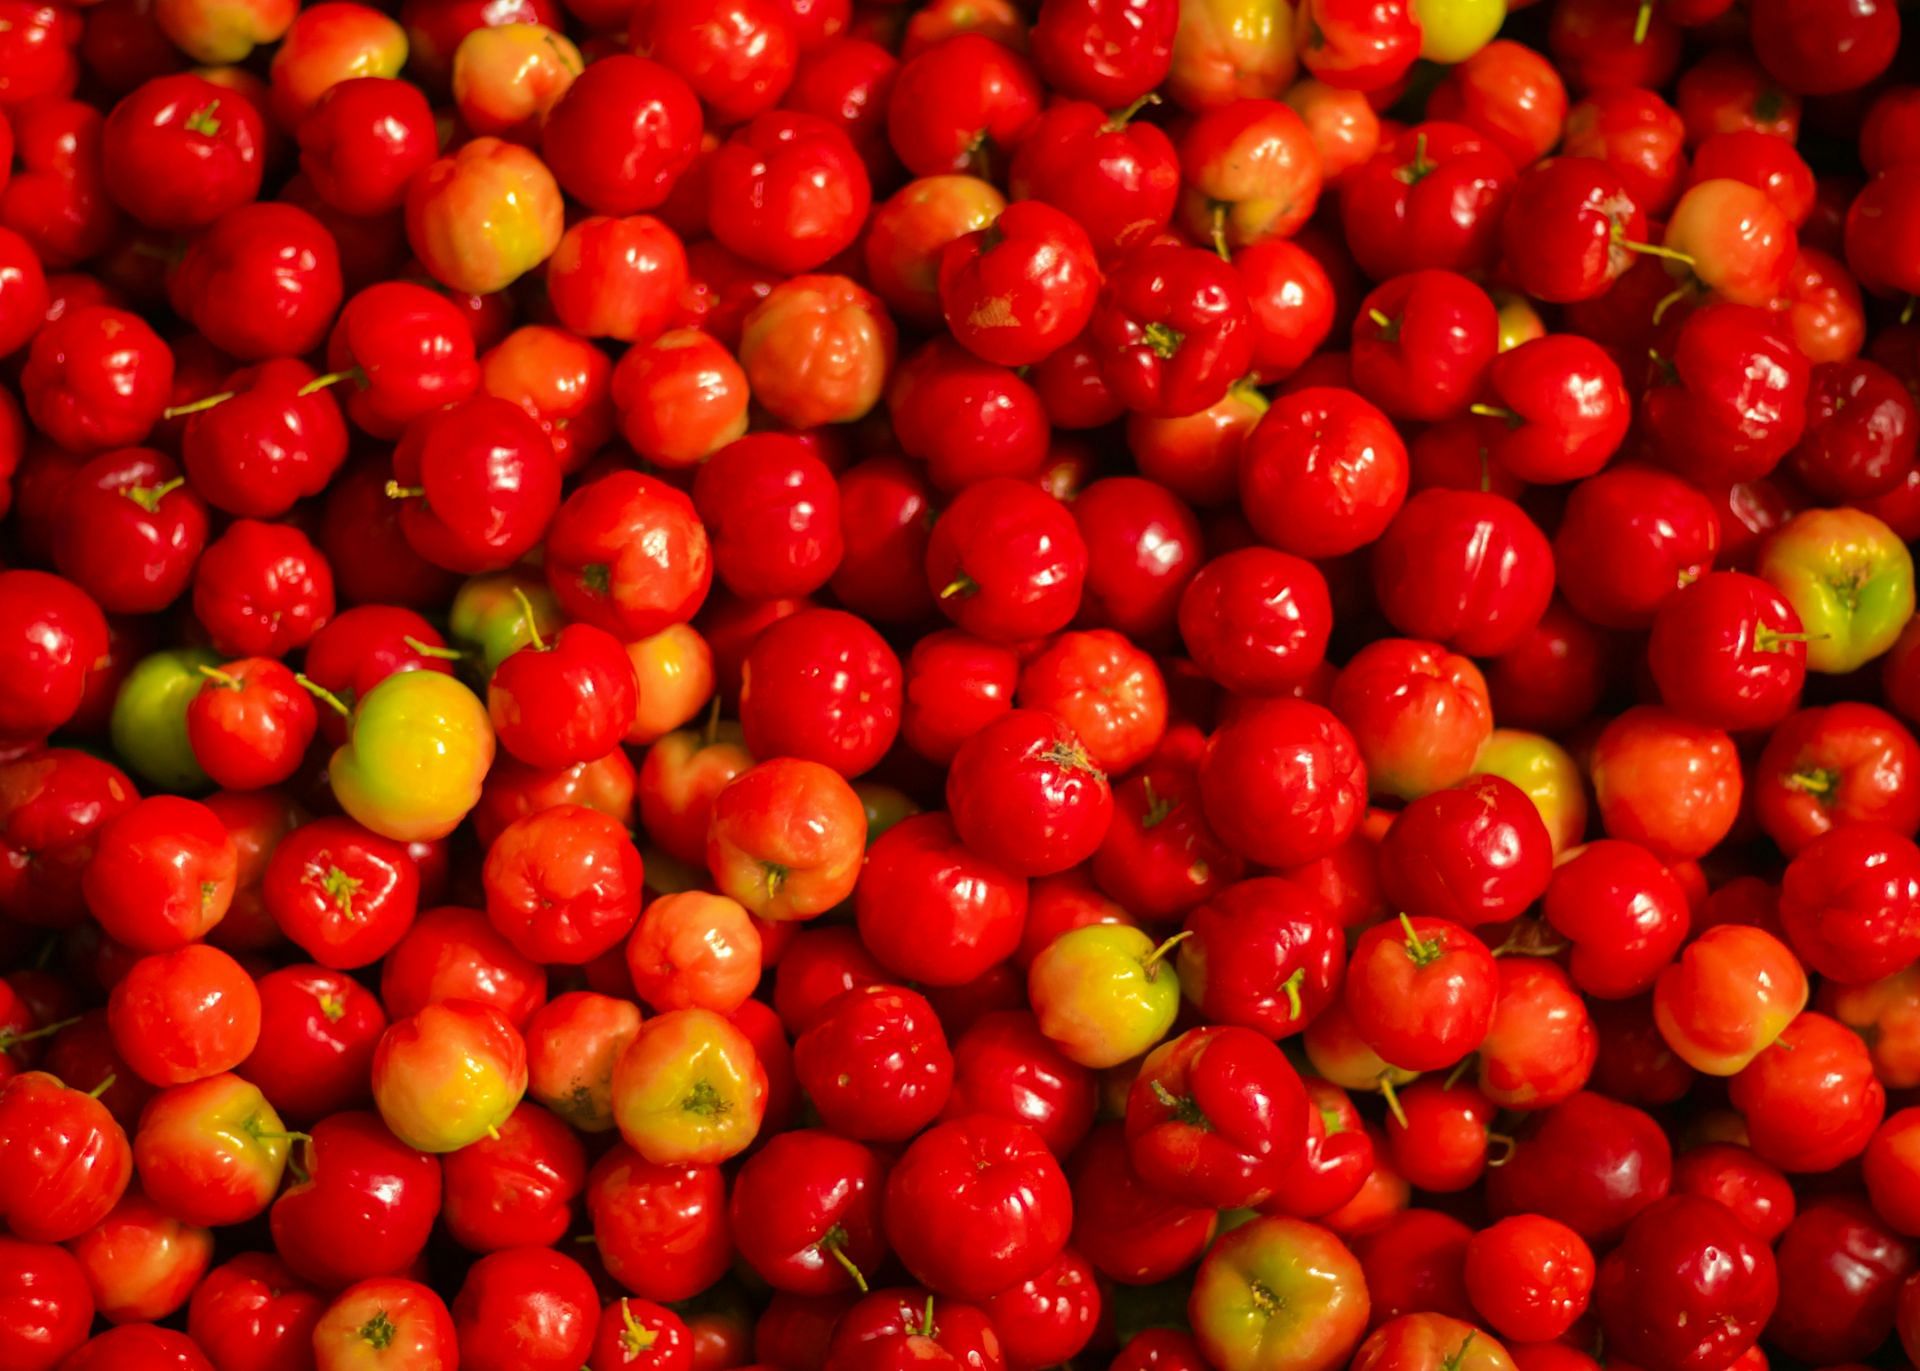 acerola cherry benefits are many (Image by Yuri Carneiro/Unsplash)